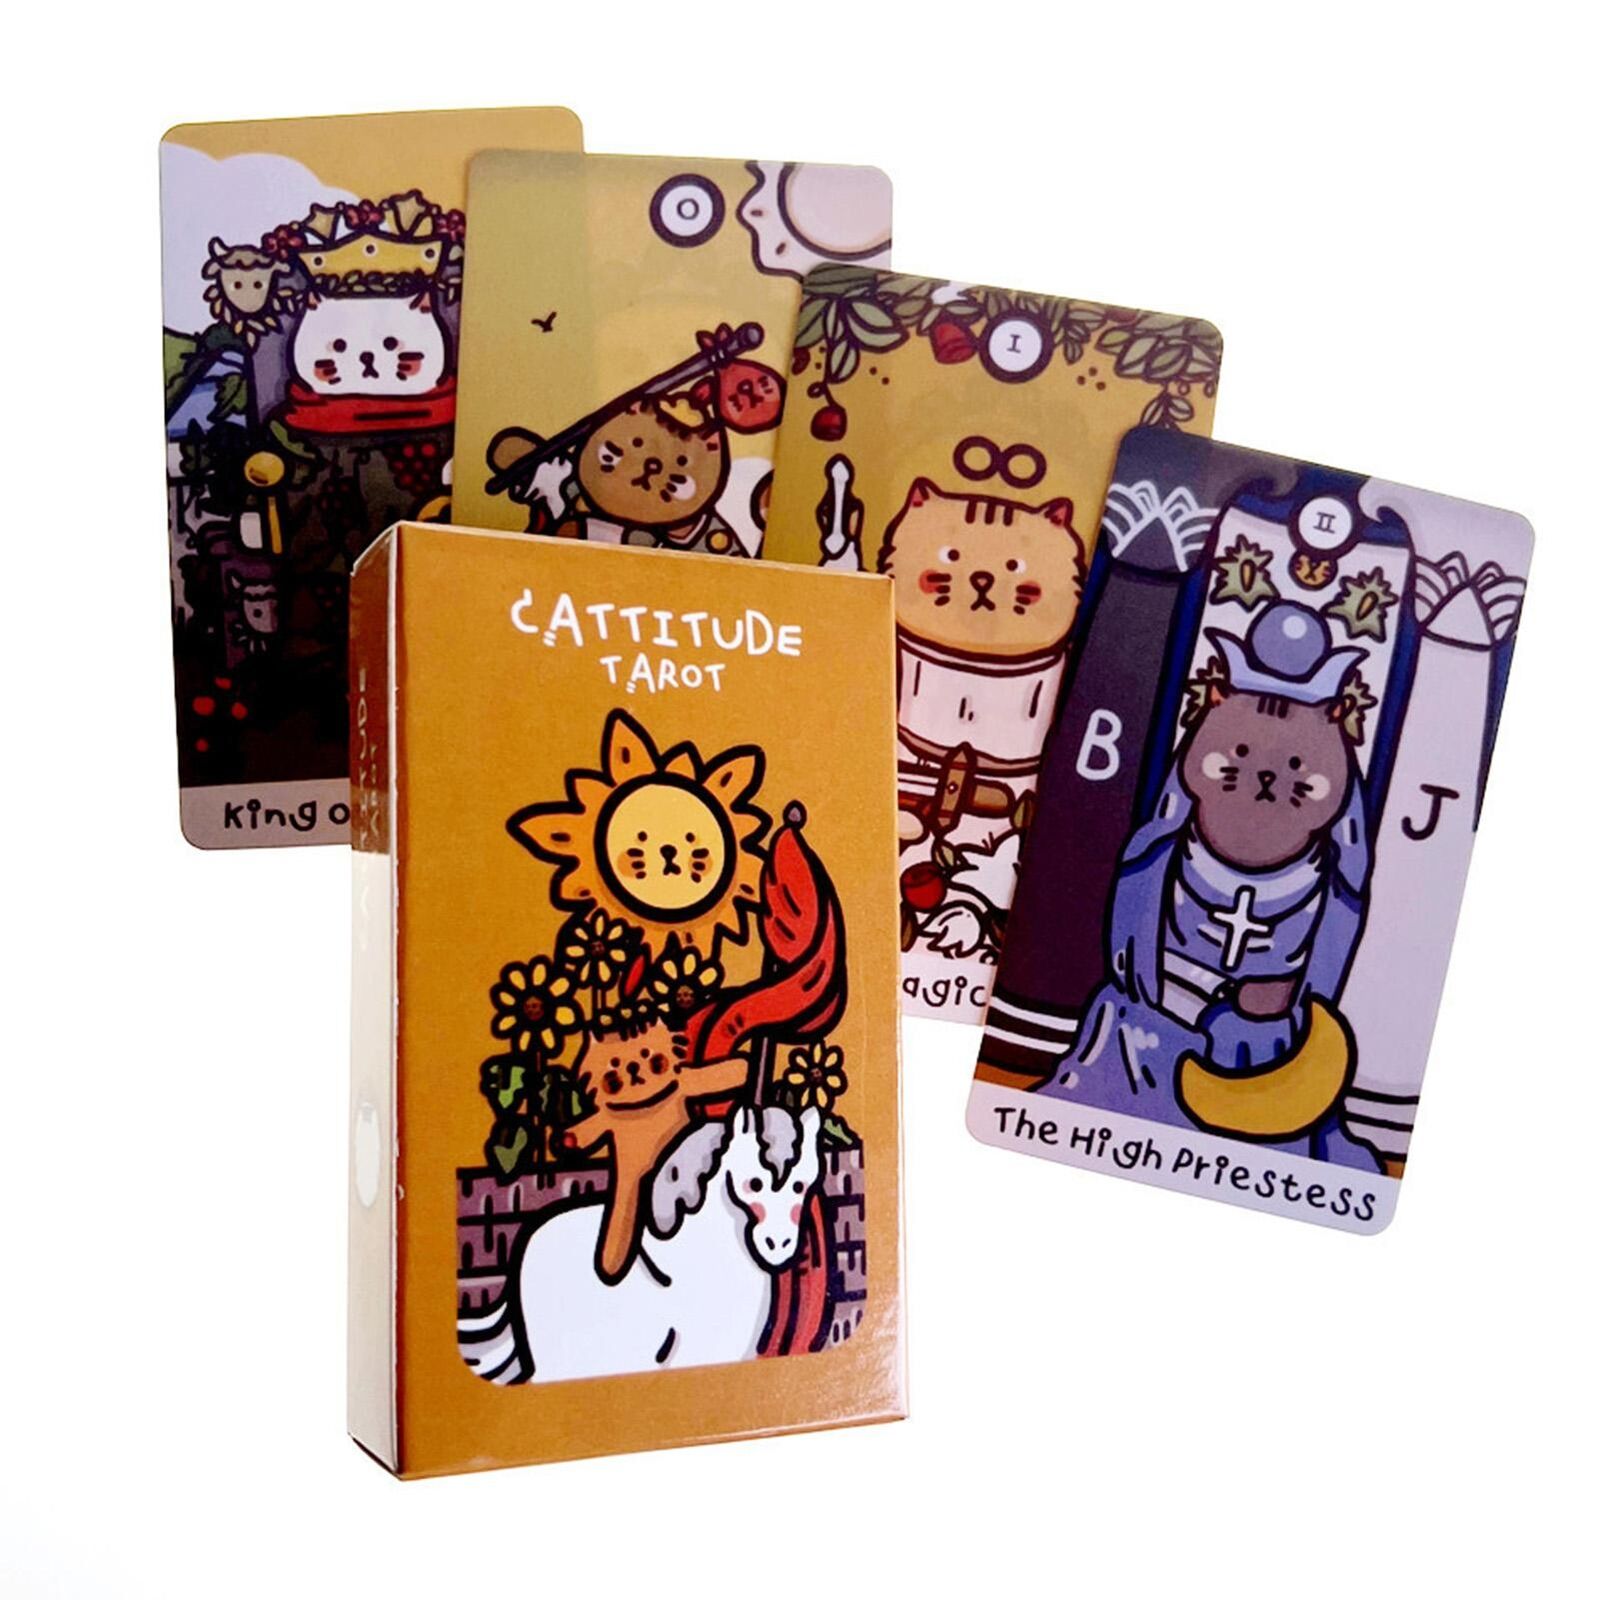 Cattitude Tarot Decks Interactive Tarot Cards Board Game Classic Art Style